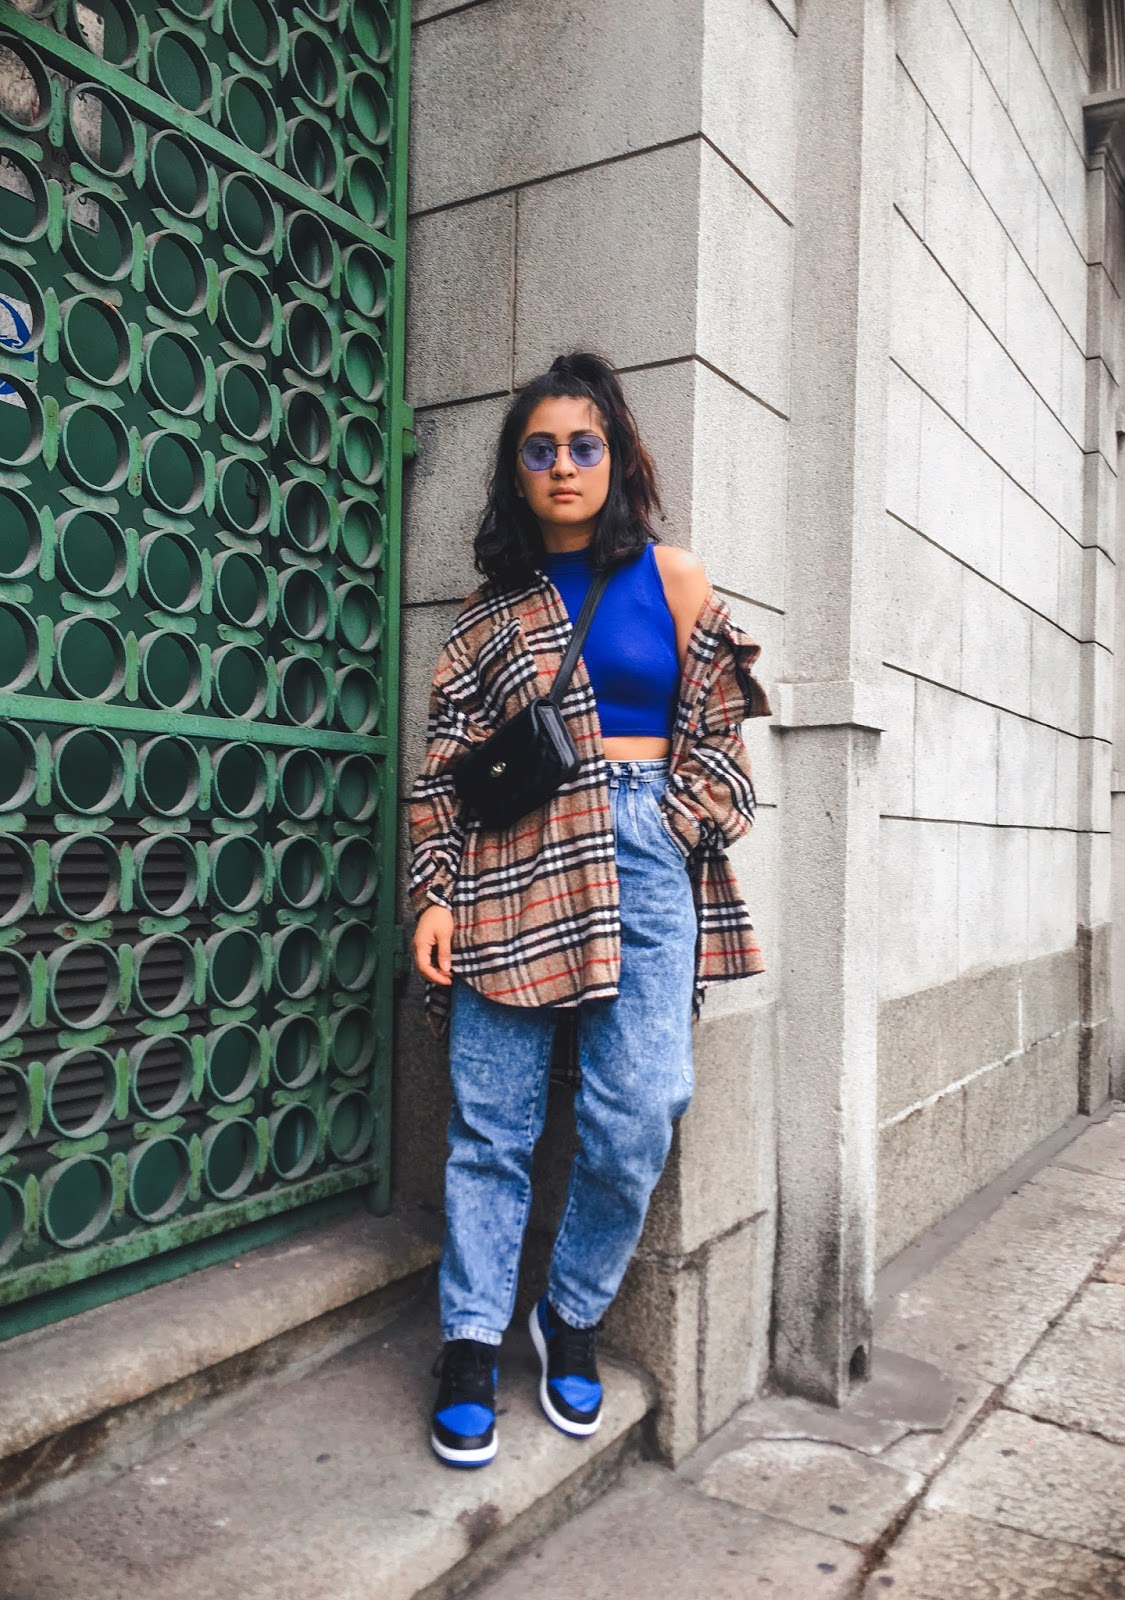 macau fashion blogger wearing plaid outfits